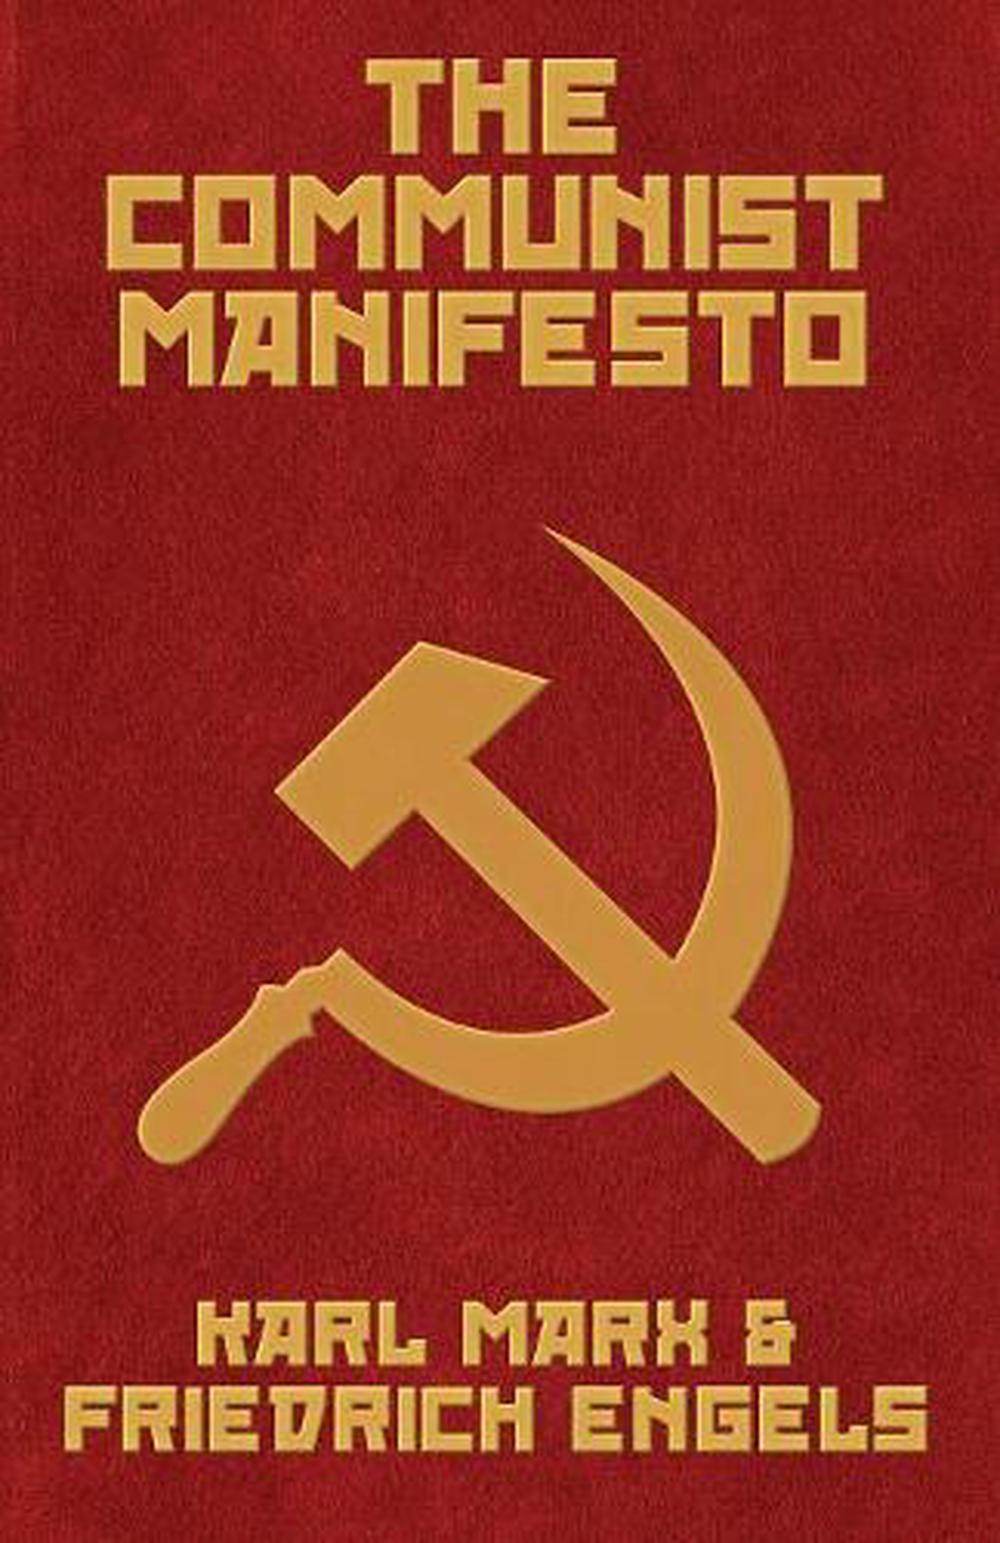 karl marx the communist manifesto pdf download